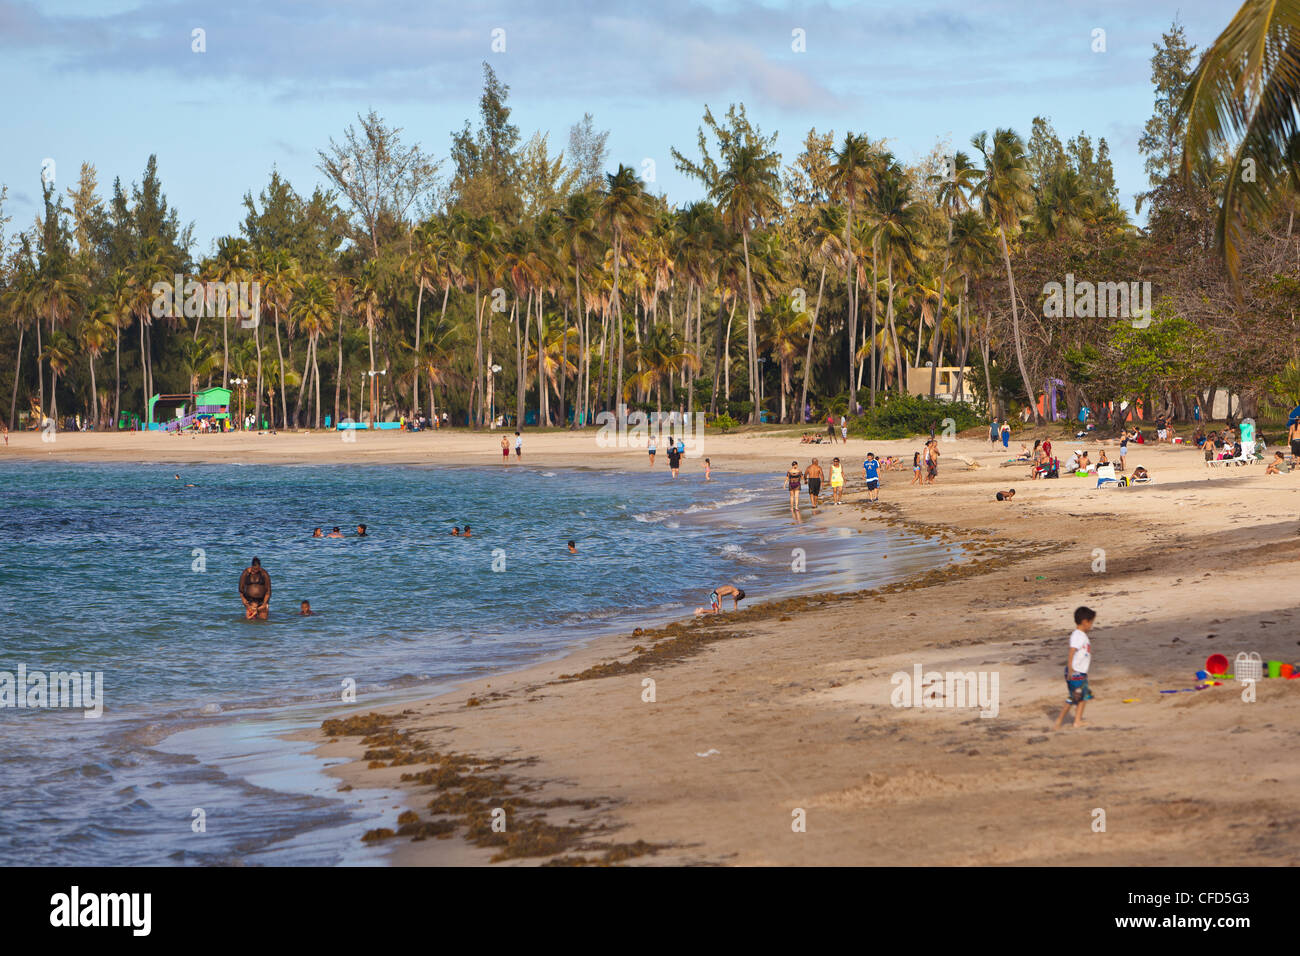 LUQUILLO, PUERTO RICO - People enjoying public beach. Stock Photo